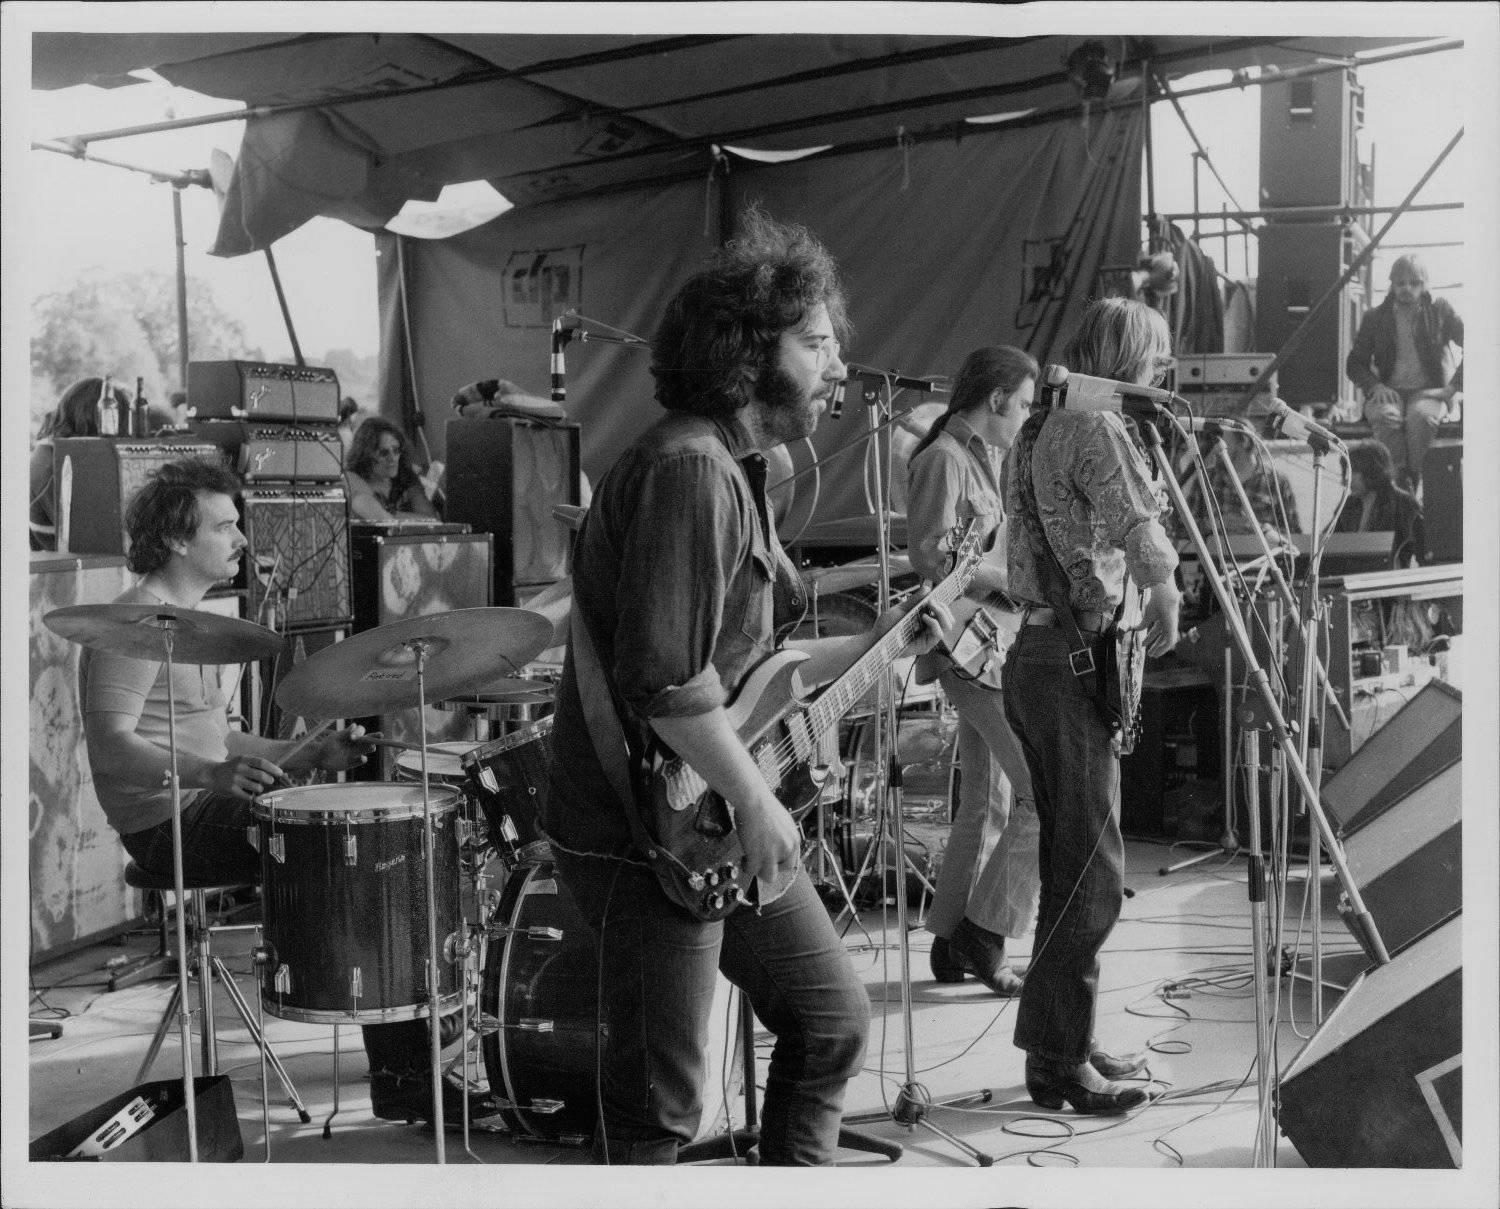 Unknown Black and White Photograph - The Grateful Dead at Festival Vintage Original Photograph